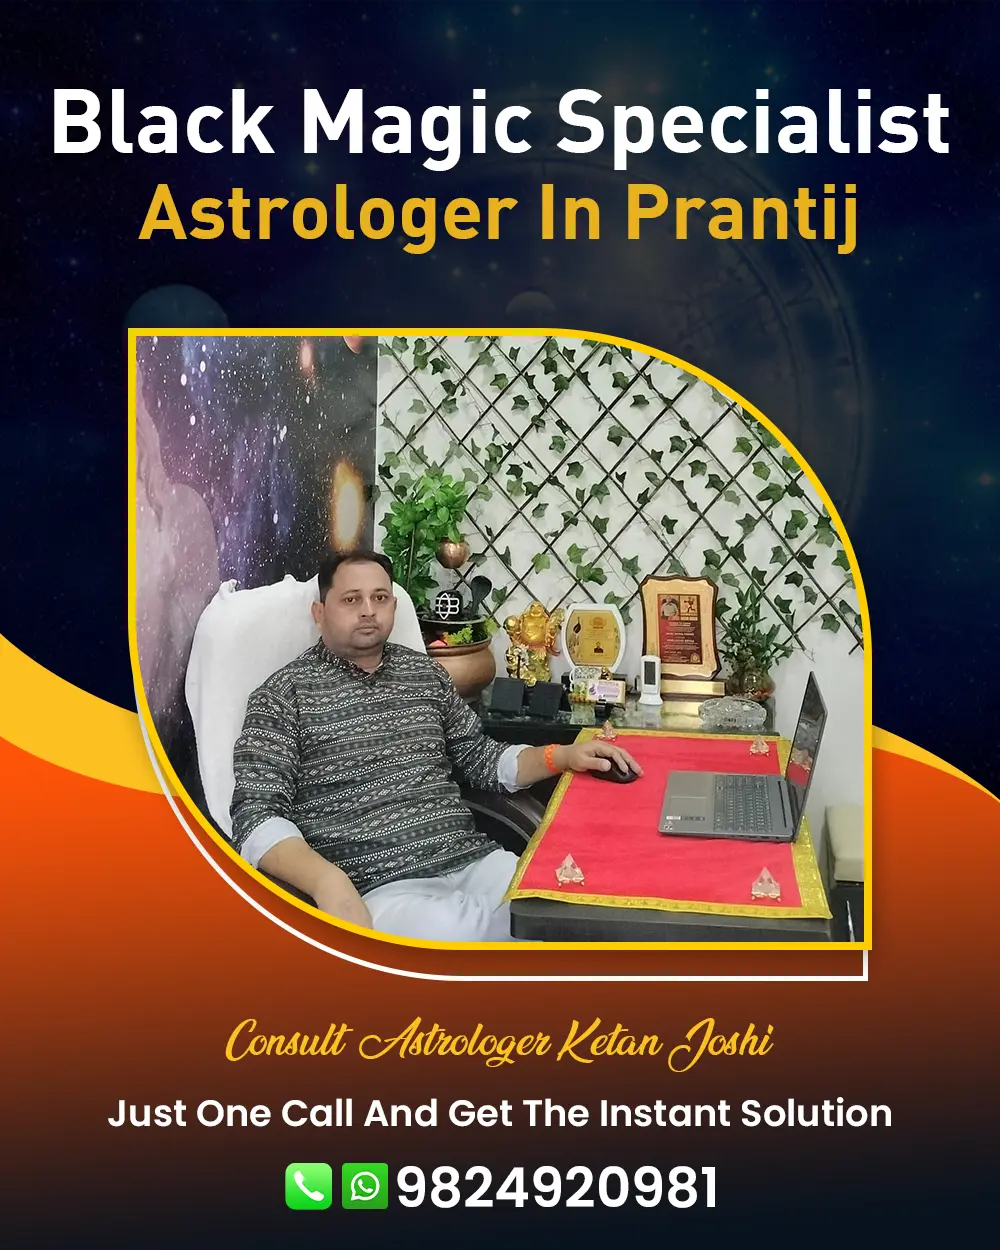 Black Magic Specialist Astrologer In Prantij